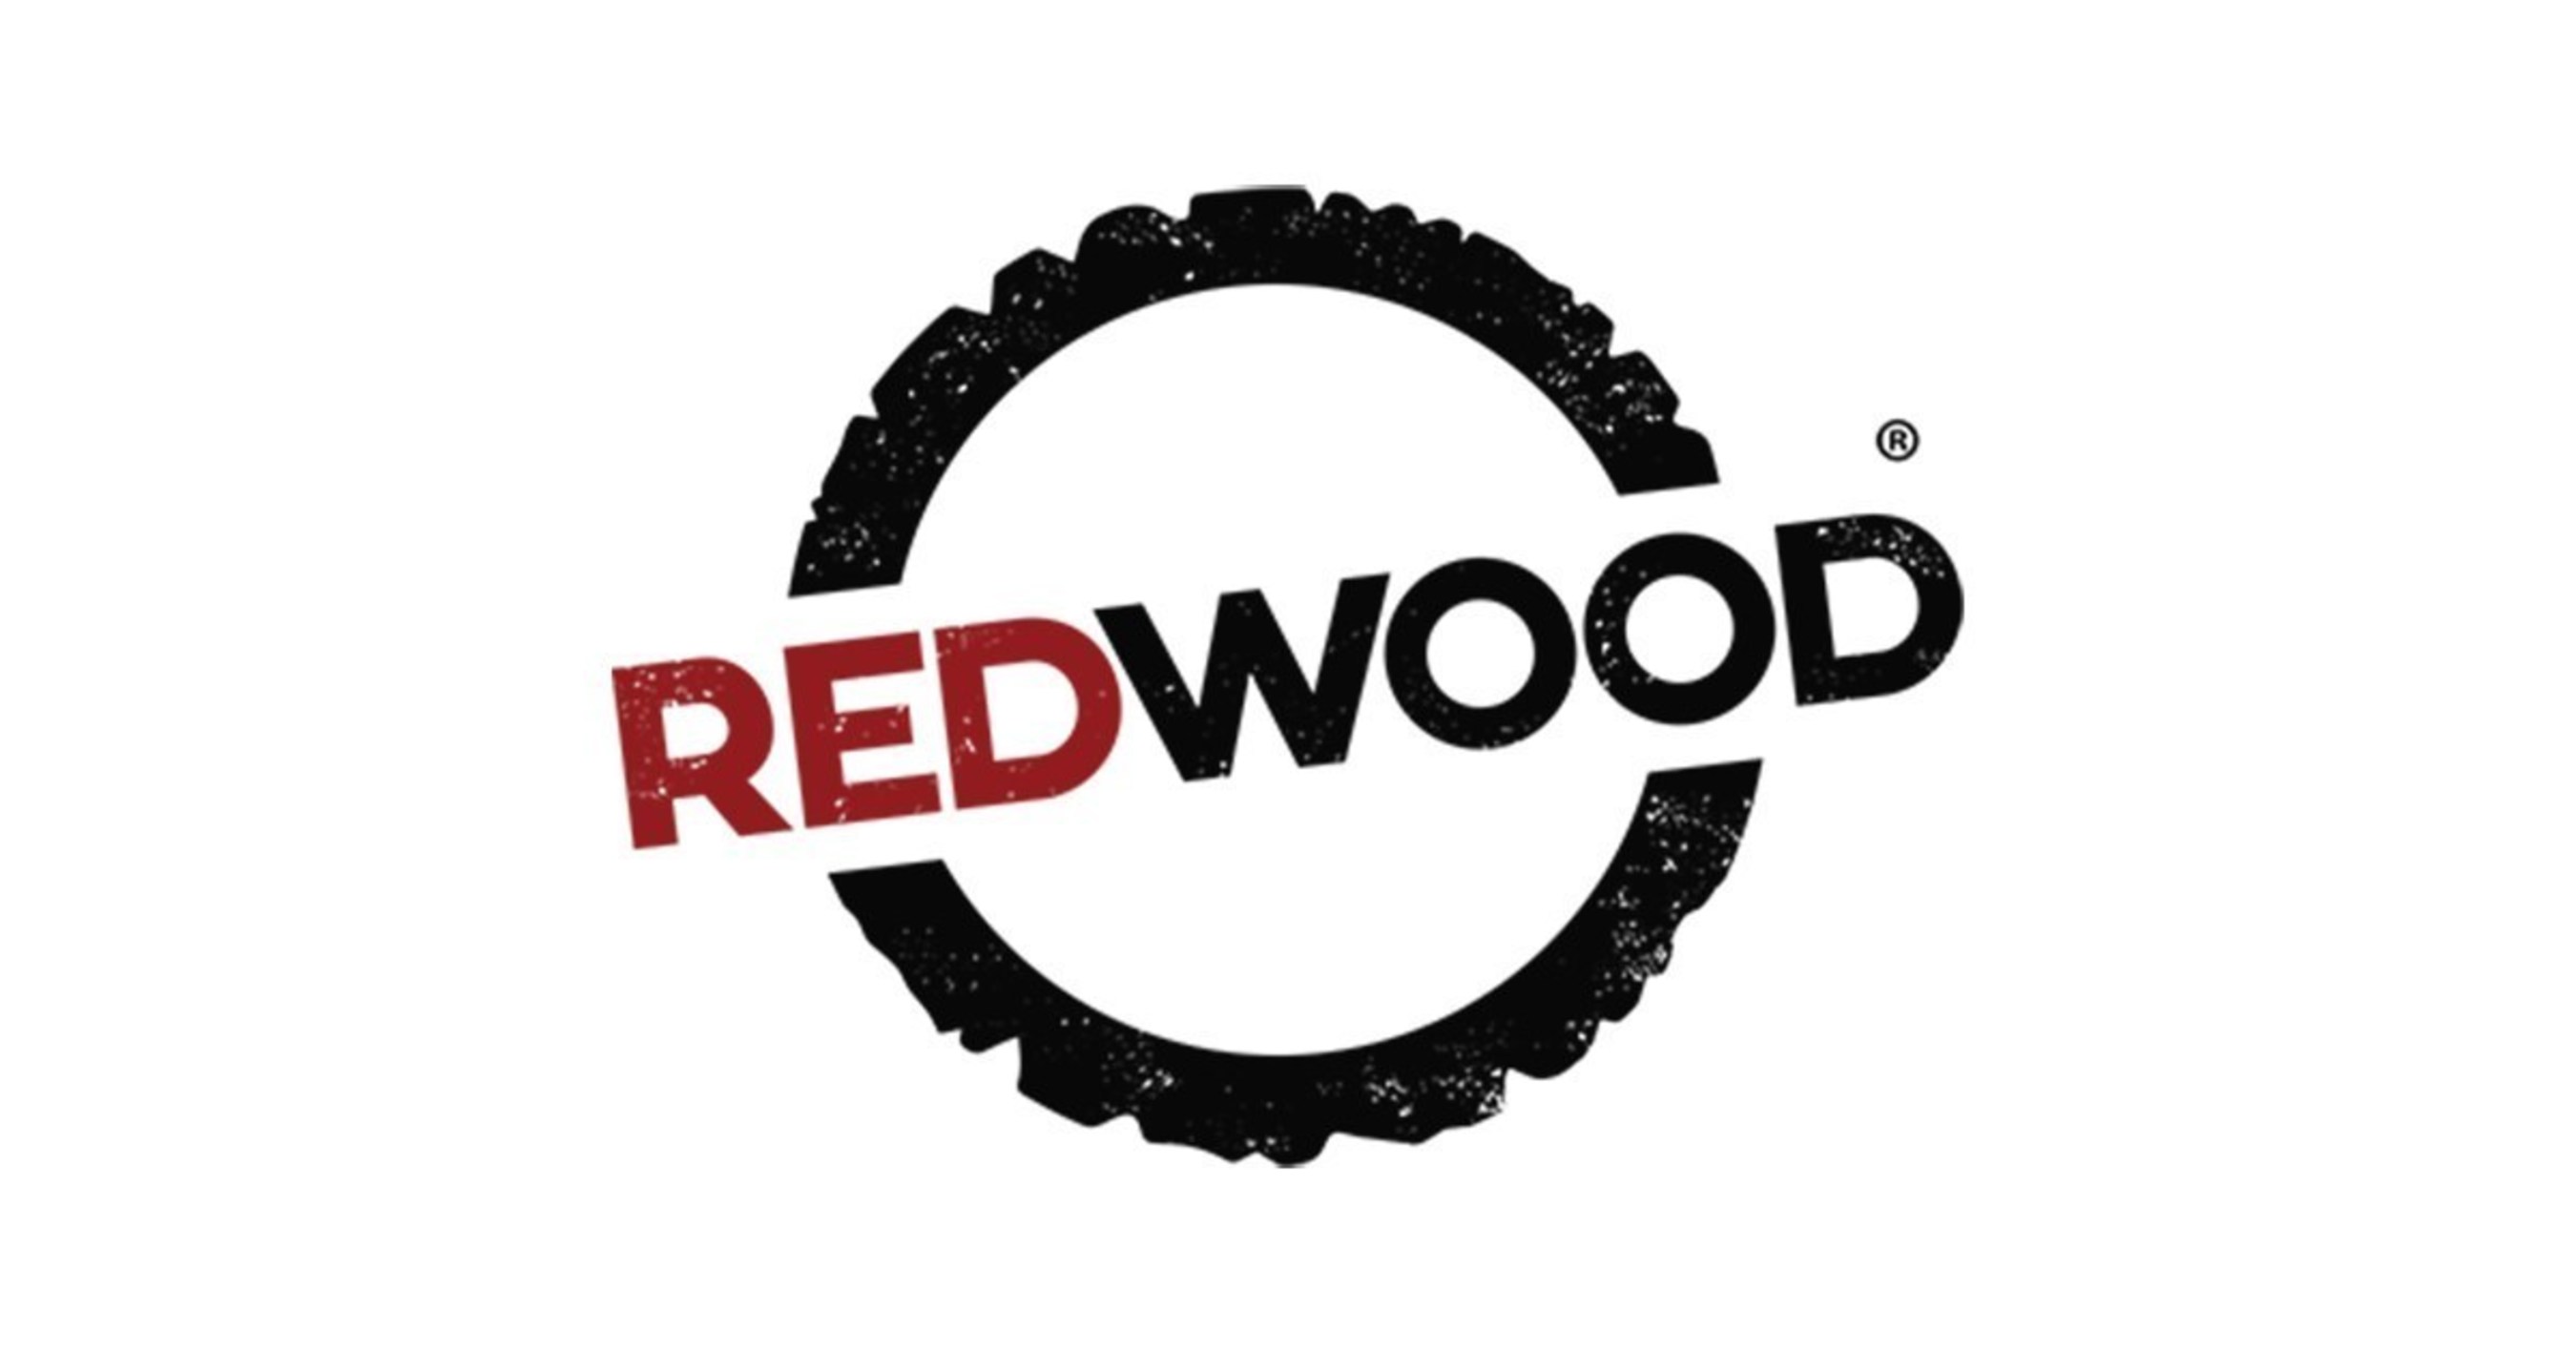 Learn more at www.redwoodlogistics.com